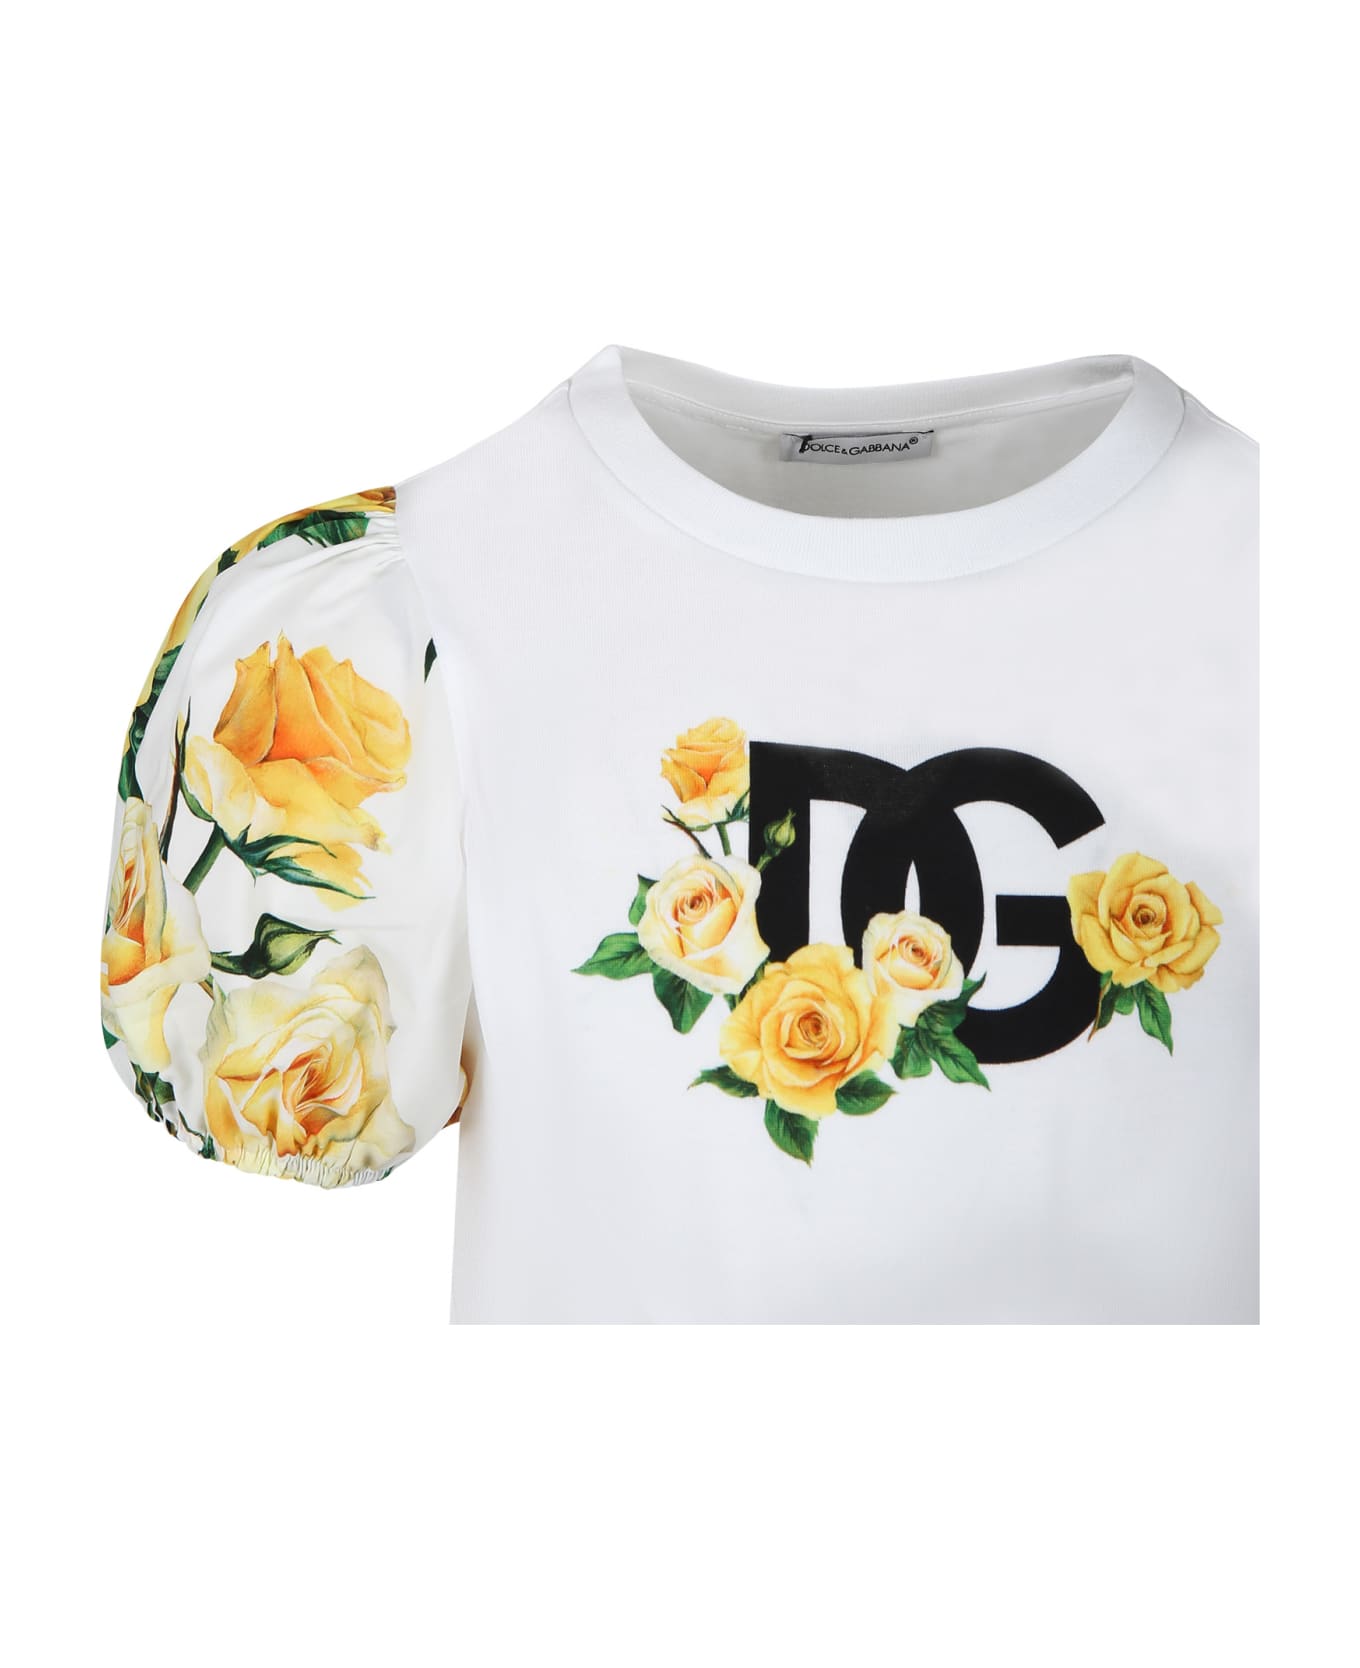 Dolce & Gabbana White T-shirt For Girl With Flowering Pattern - White